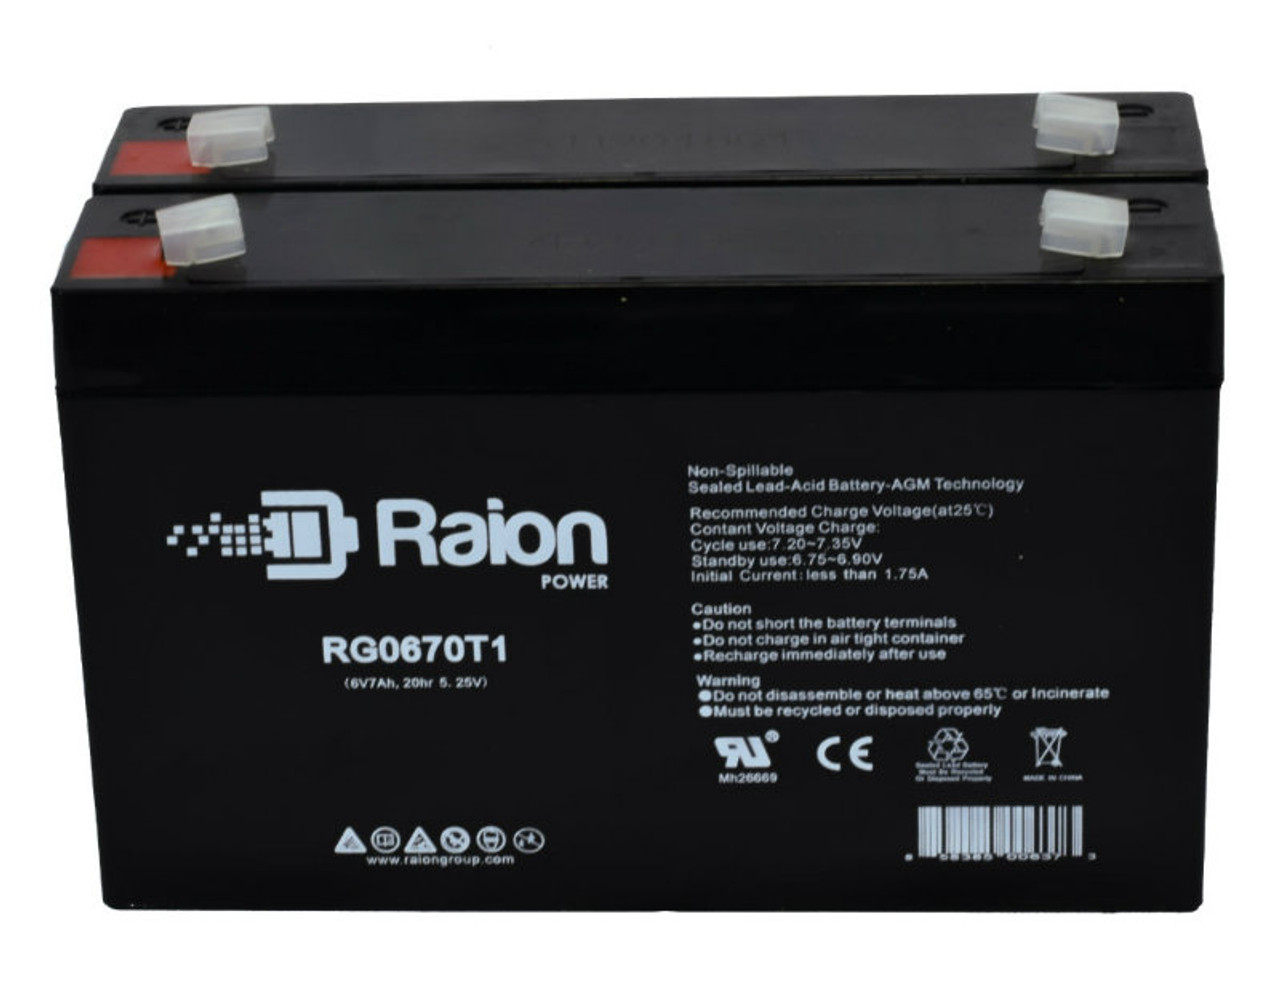 Raion Power RG0670T1 6V 7Ah Replacement Emergency Light Battery for Lightalarms E8 - 2 Pack